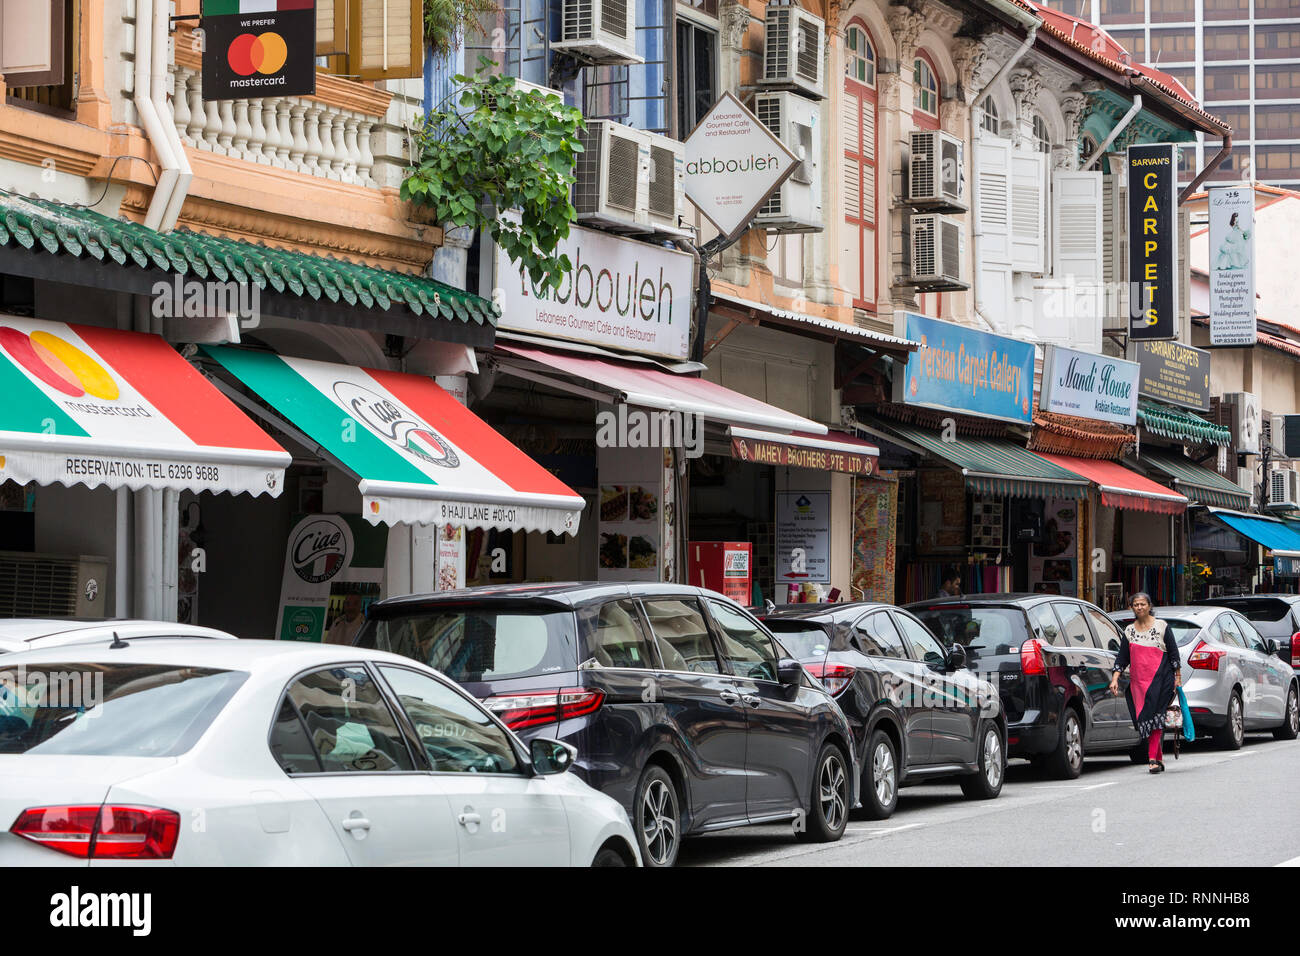 Arab Street Scene, Kampong Glam. Singapore. Stock Photo